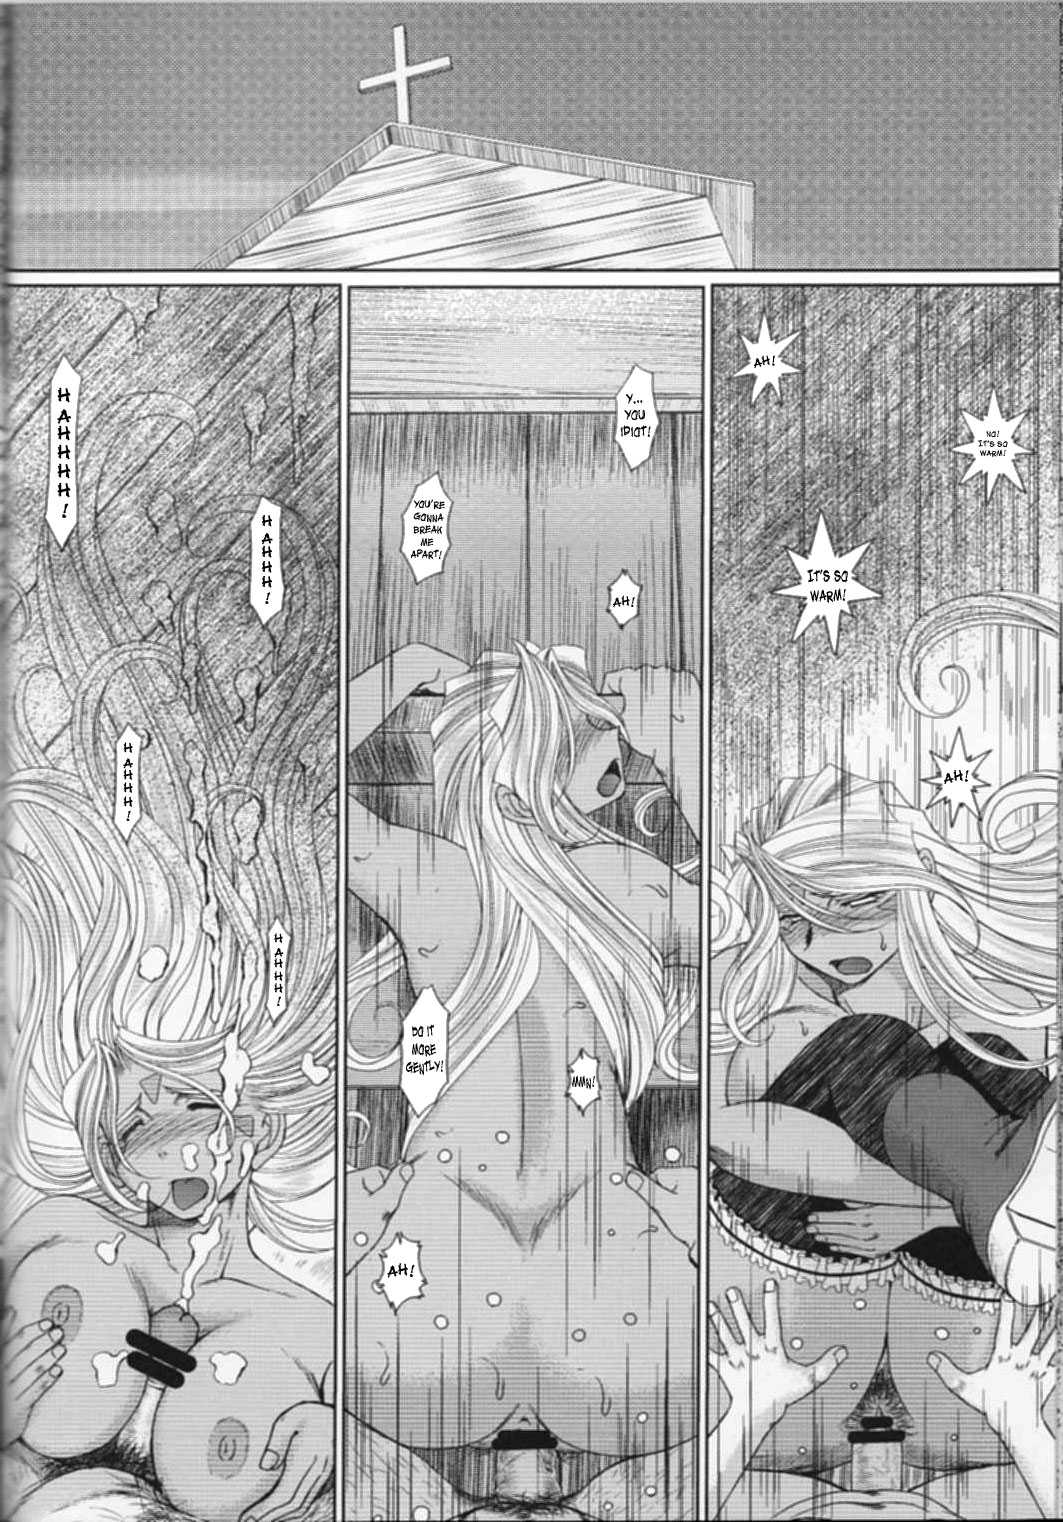 [Circle Outerworld] Midgard X (Aa Megami-sama / Oh My Goddess! (Ah! My Goddess!)) [English] [サークルOUTERWORLD] MIDGARD X (ああっ女神さまっ) [英語翻訳]